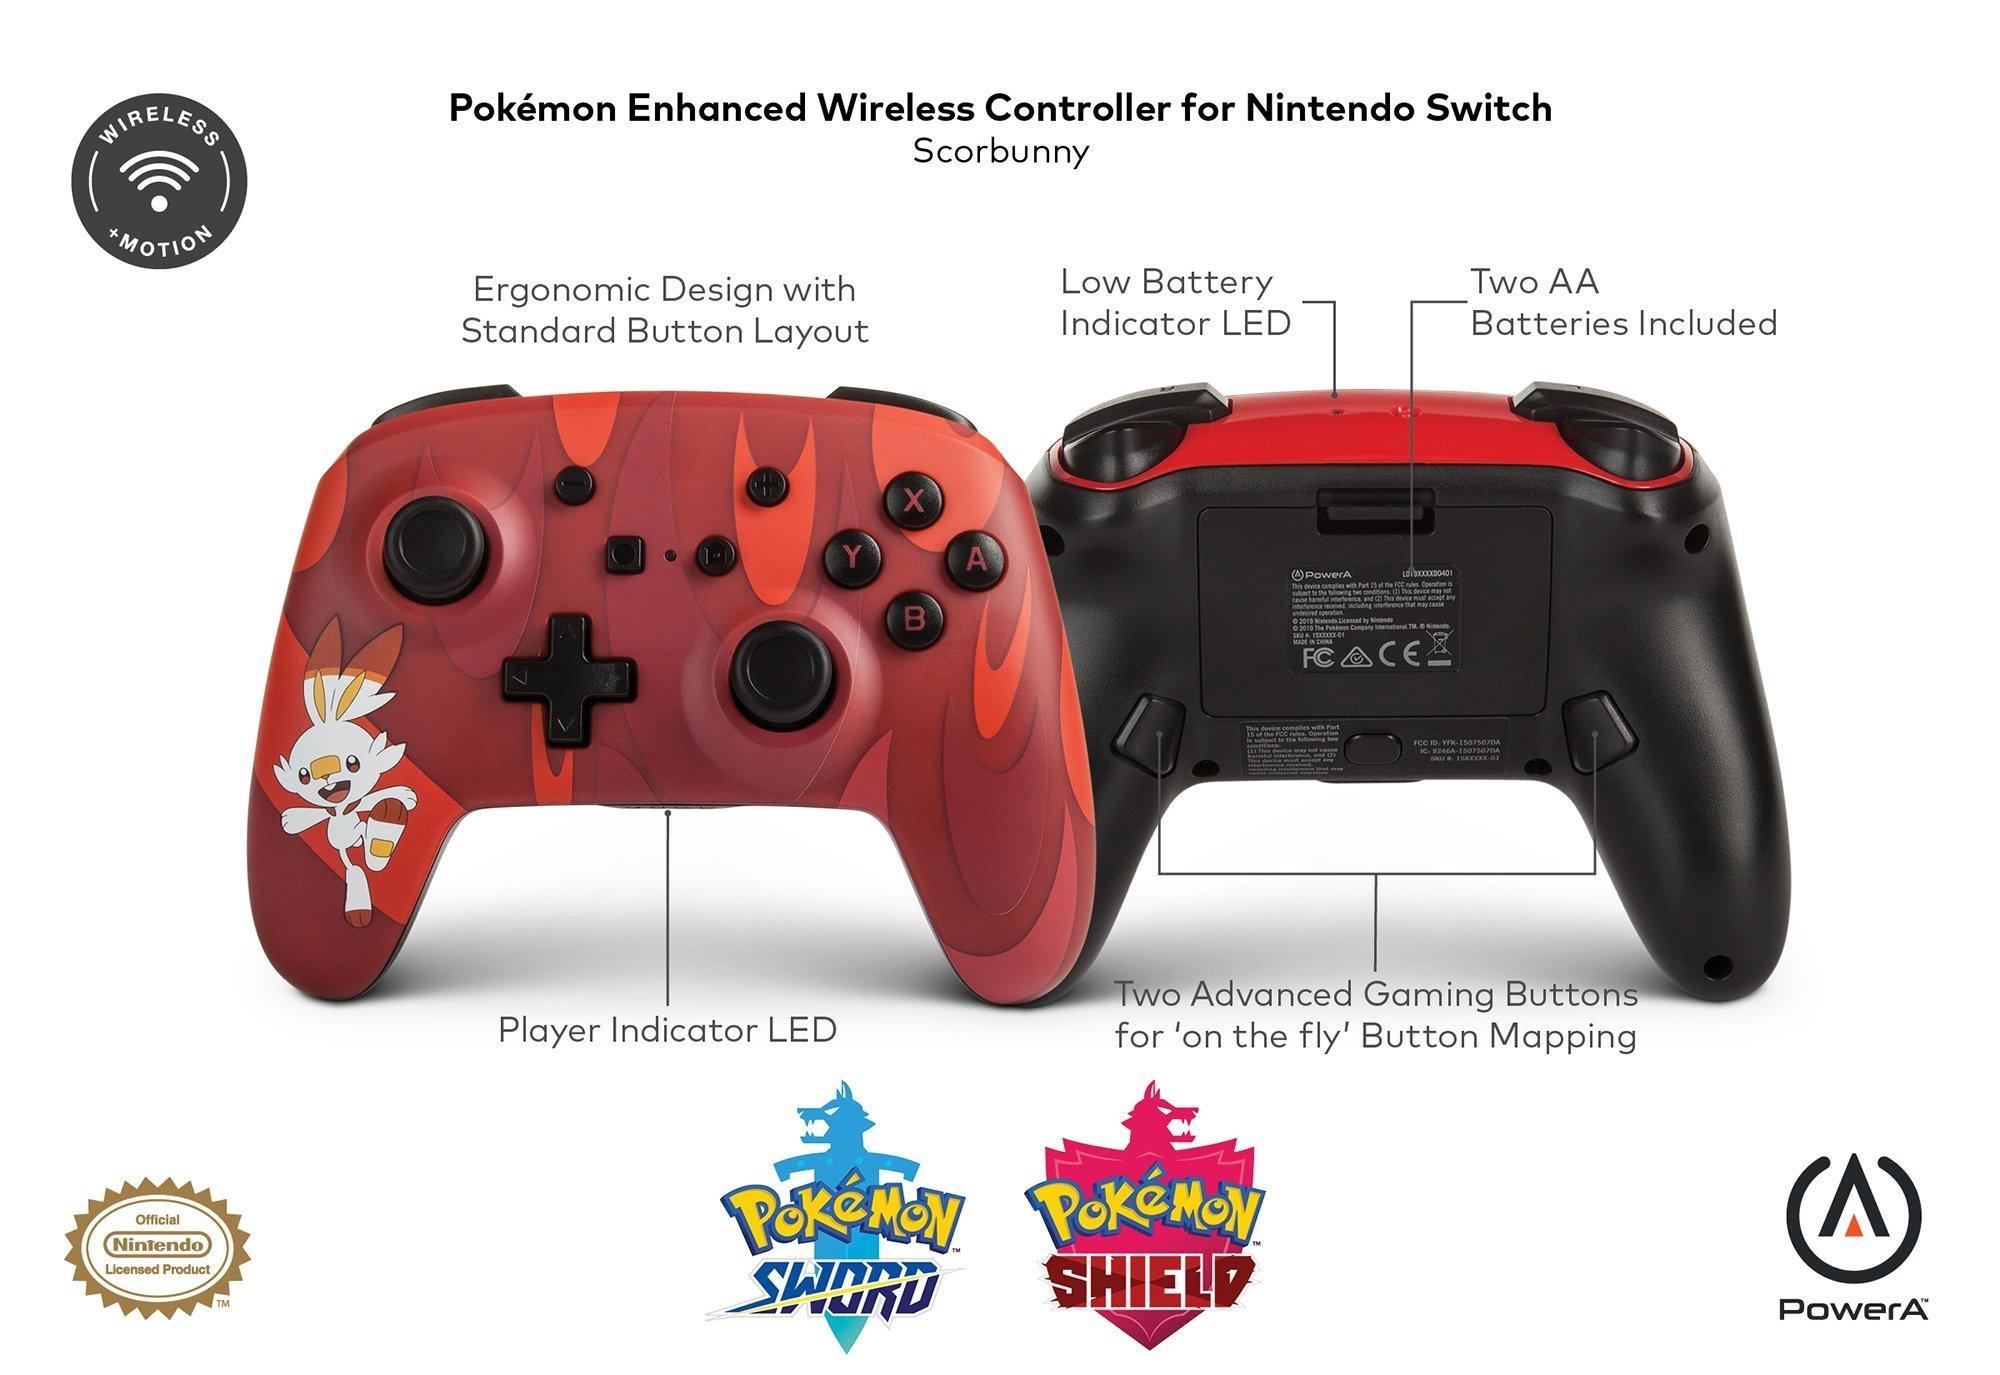 PowerA Enhanced Wireless Controller for Nintendo Switch Pokemon Scorbunny